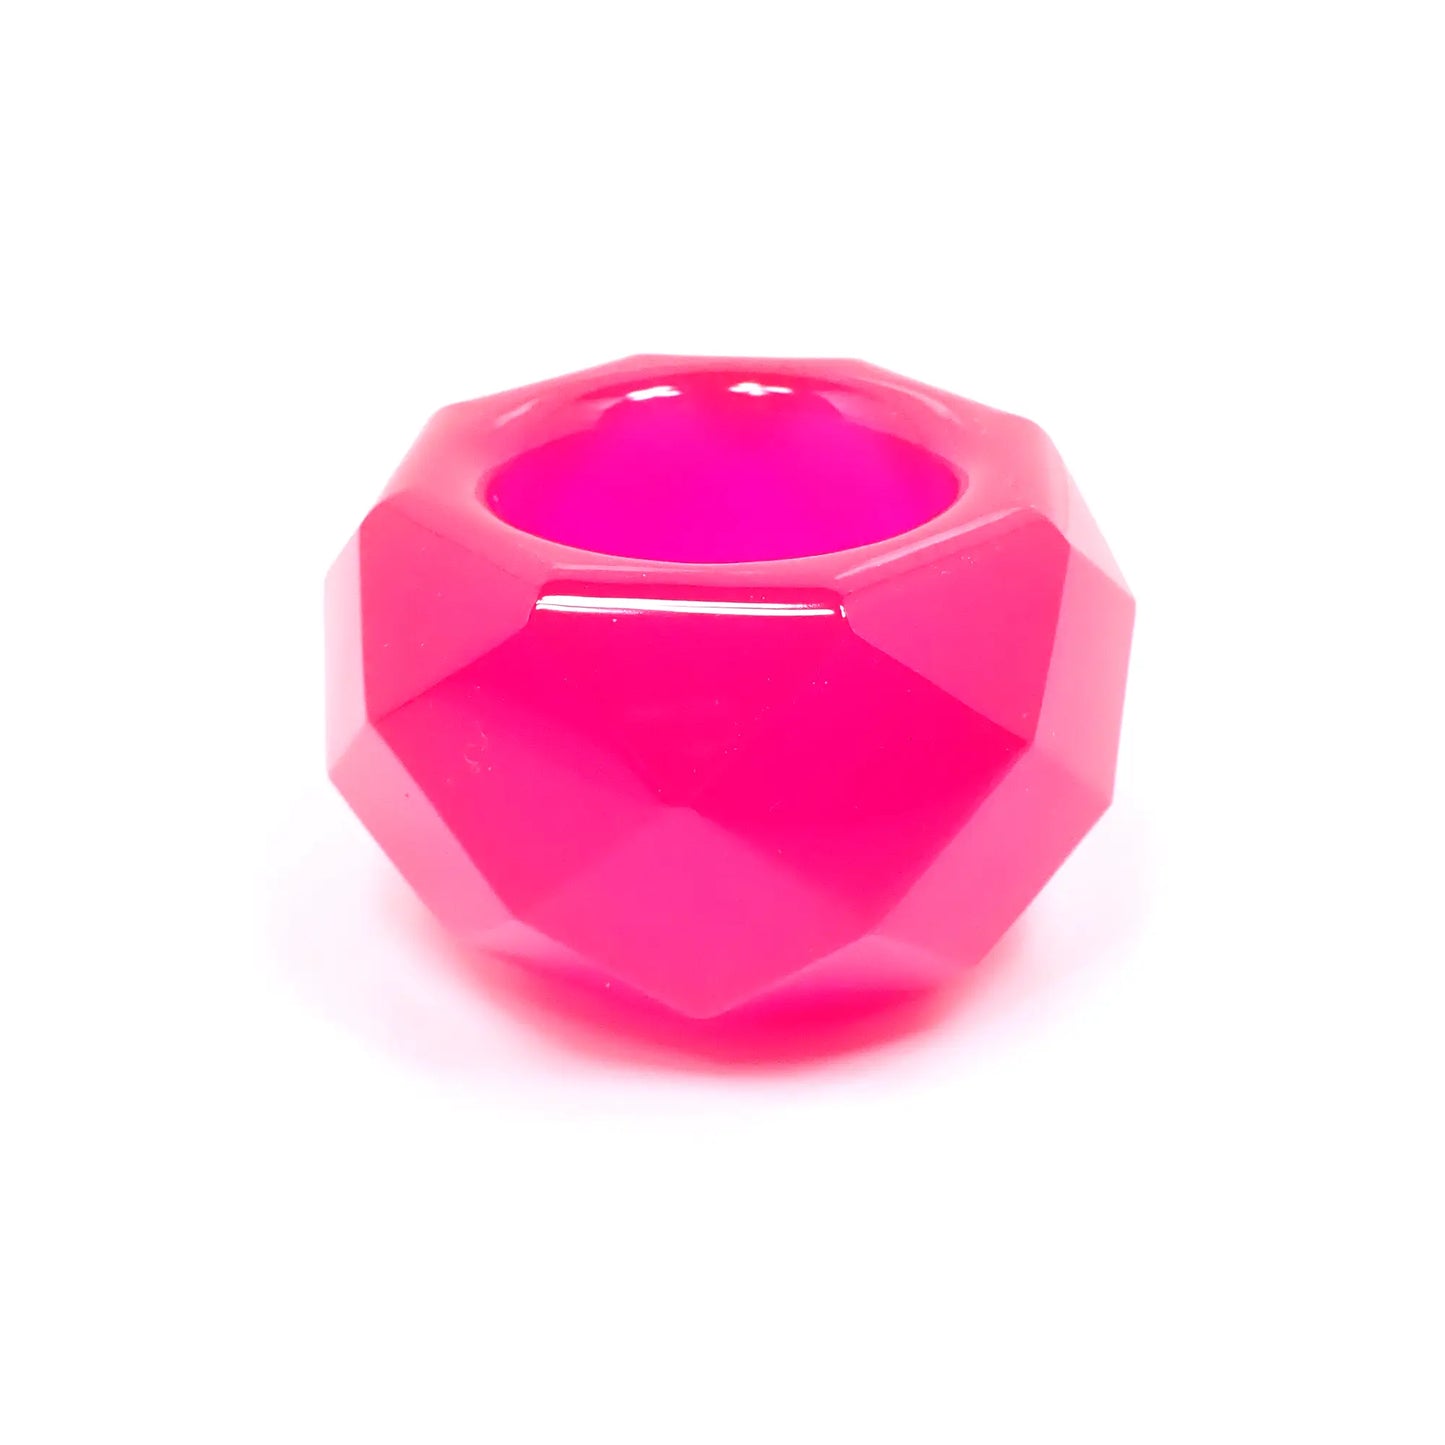 Small Neon Pink Resin Faceted Octagon Handmade Succulent Pot, Decorative Bowl, Geometric Decor